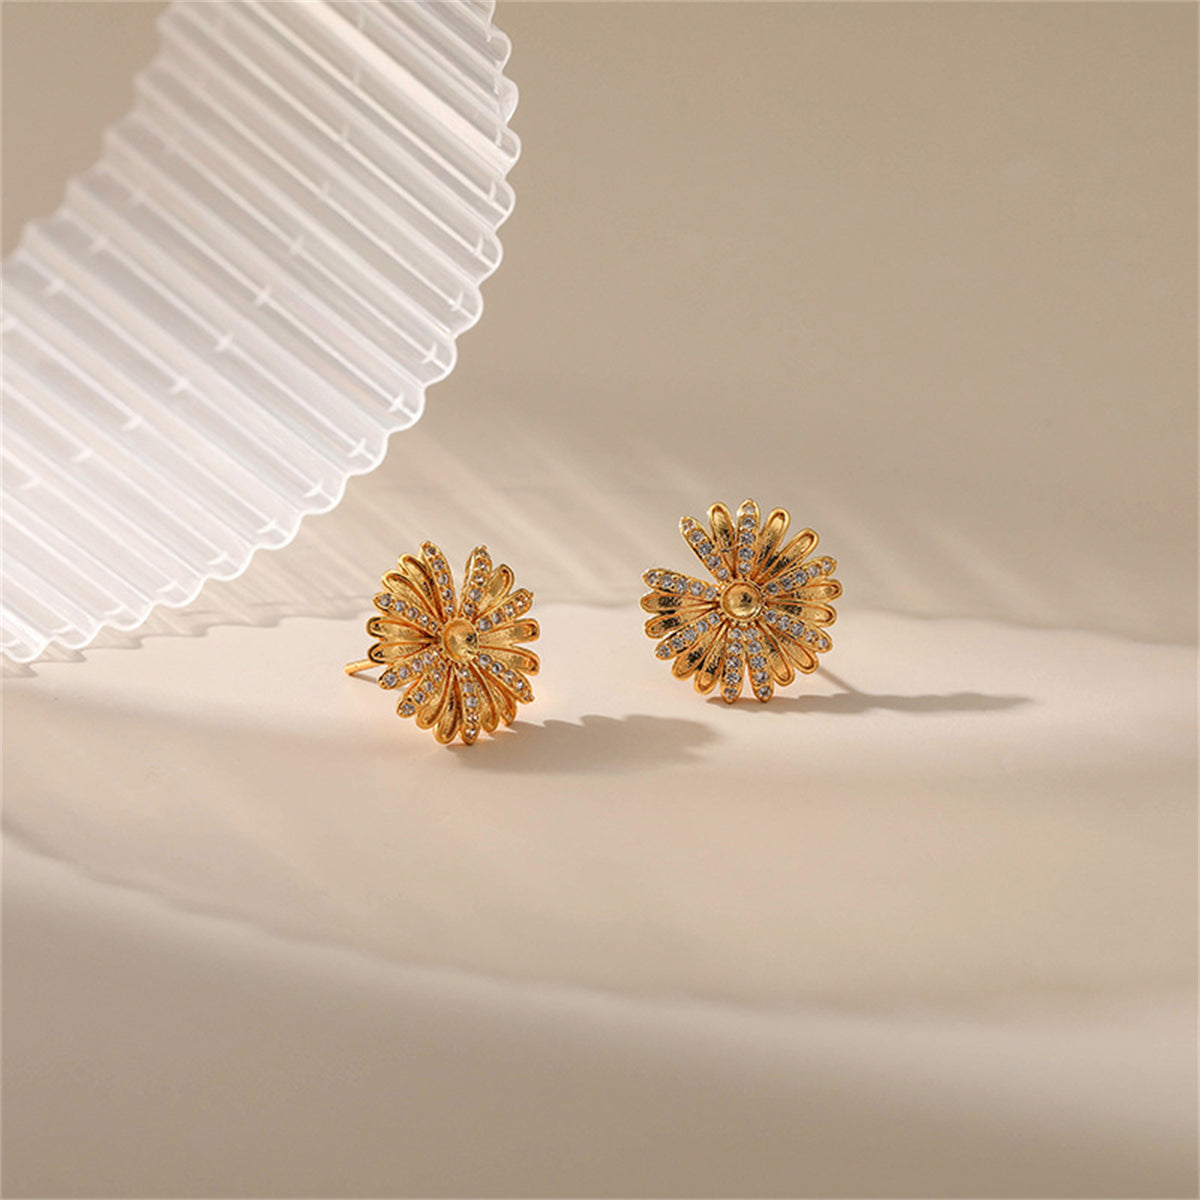 Cubic Zirconia & 18K Gold-Plated Sunflower Stud Earrings